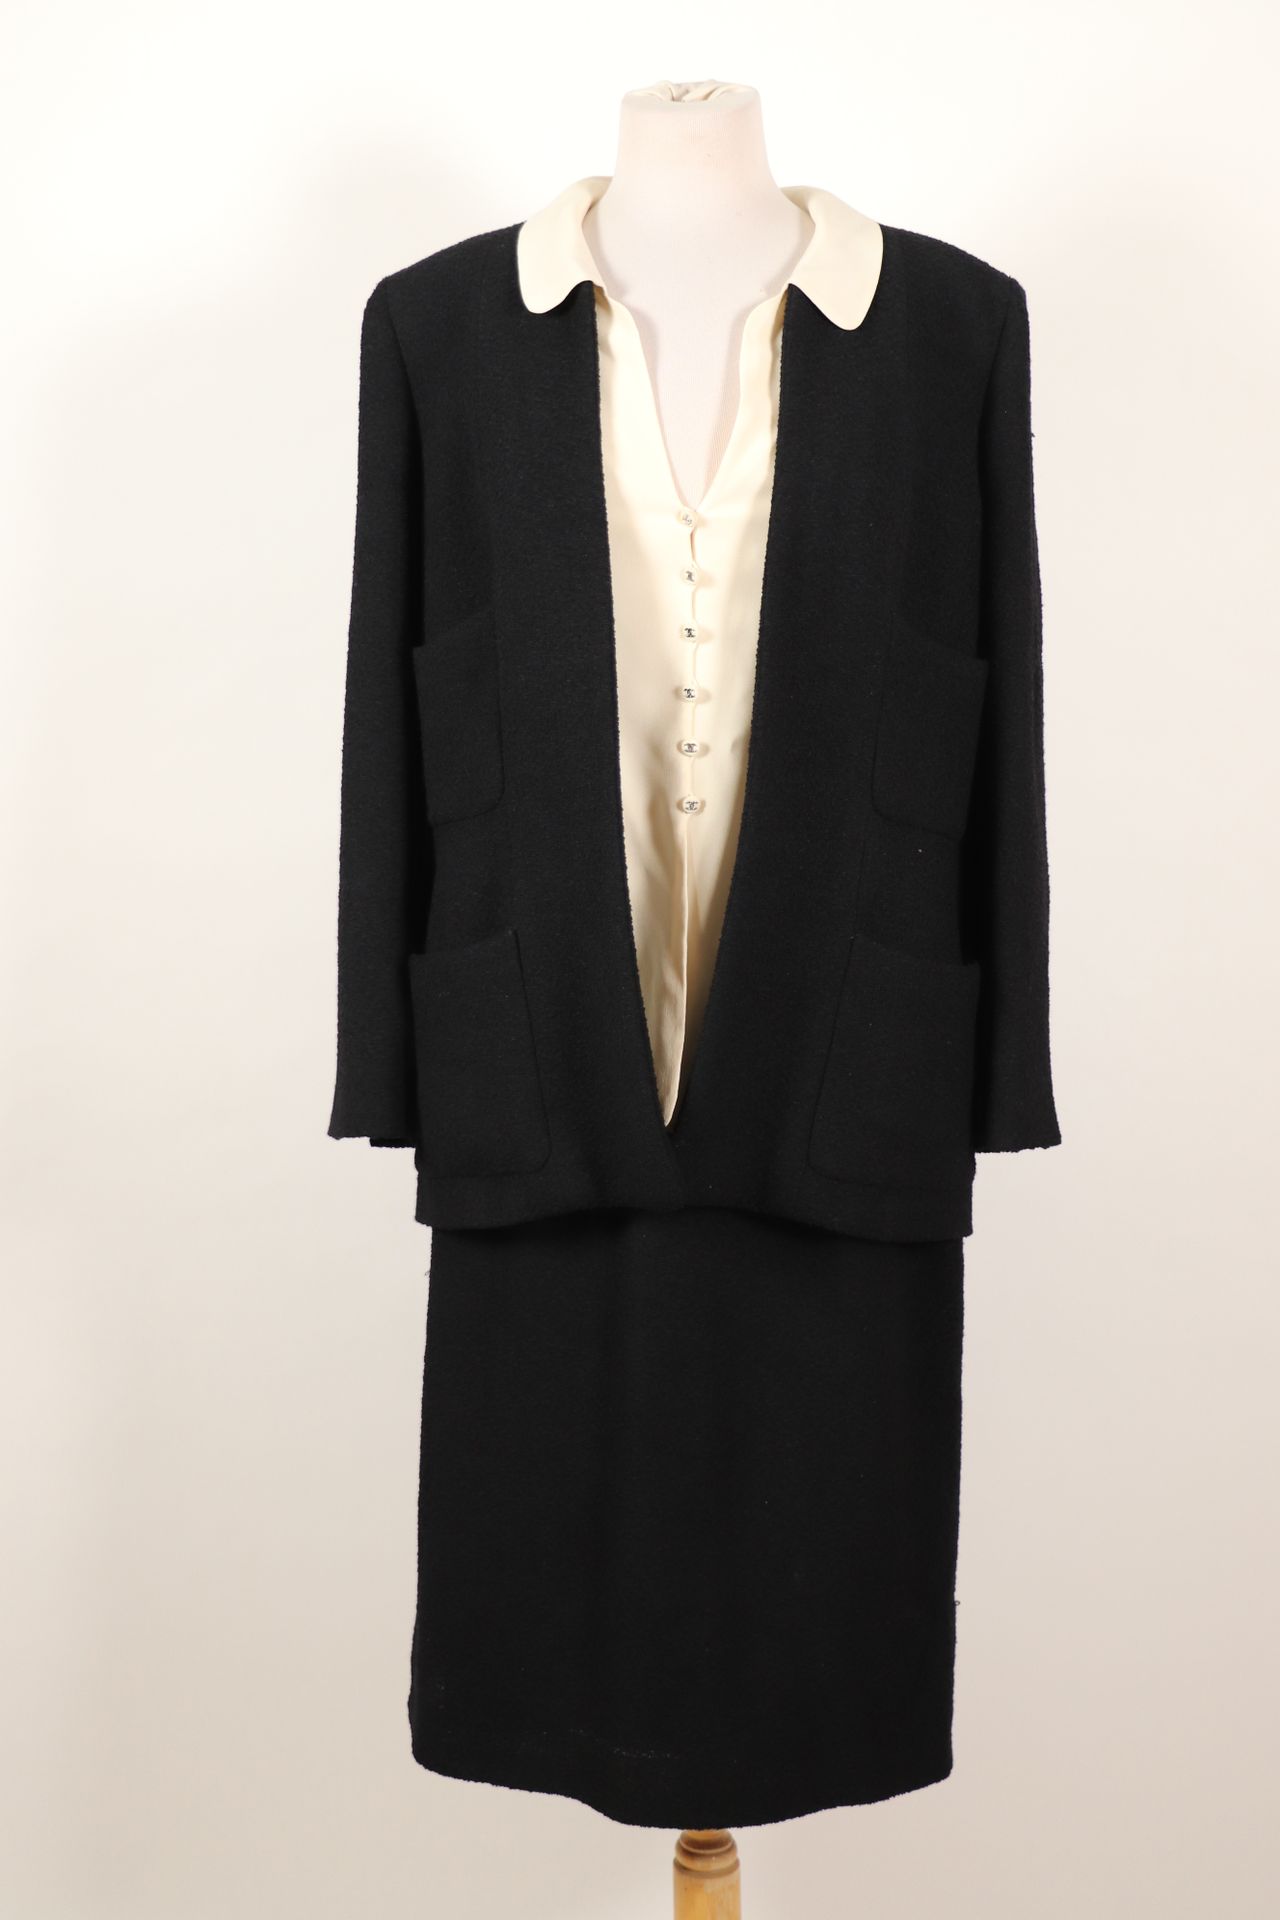 Null 香奈儿 - 黑色西装，羊毛和聚酰胺外套和裙子，奶油色丝质领子，有4个口袋和6个纽扣，46码